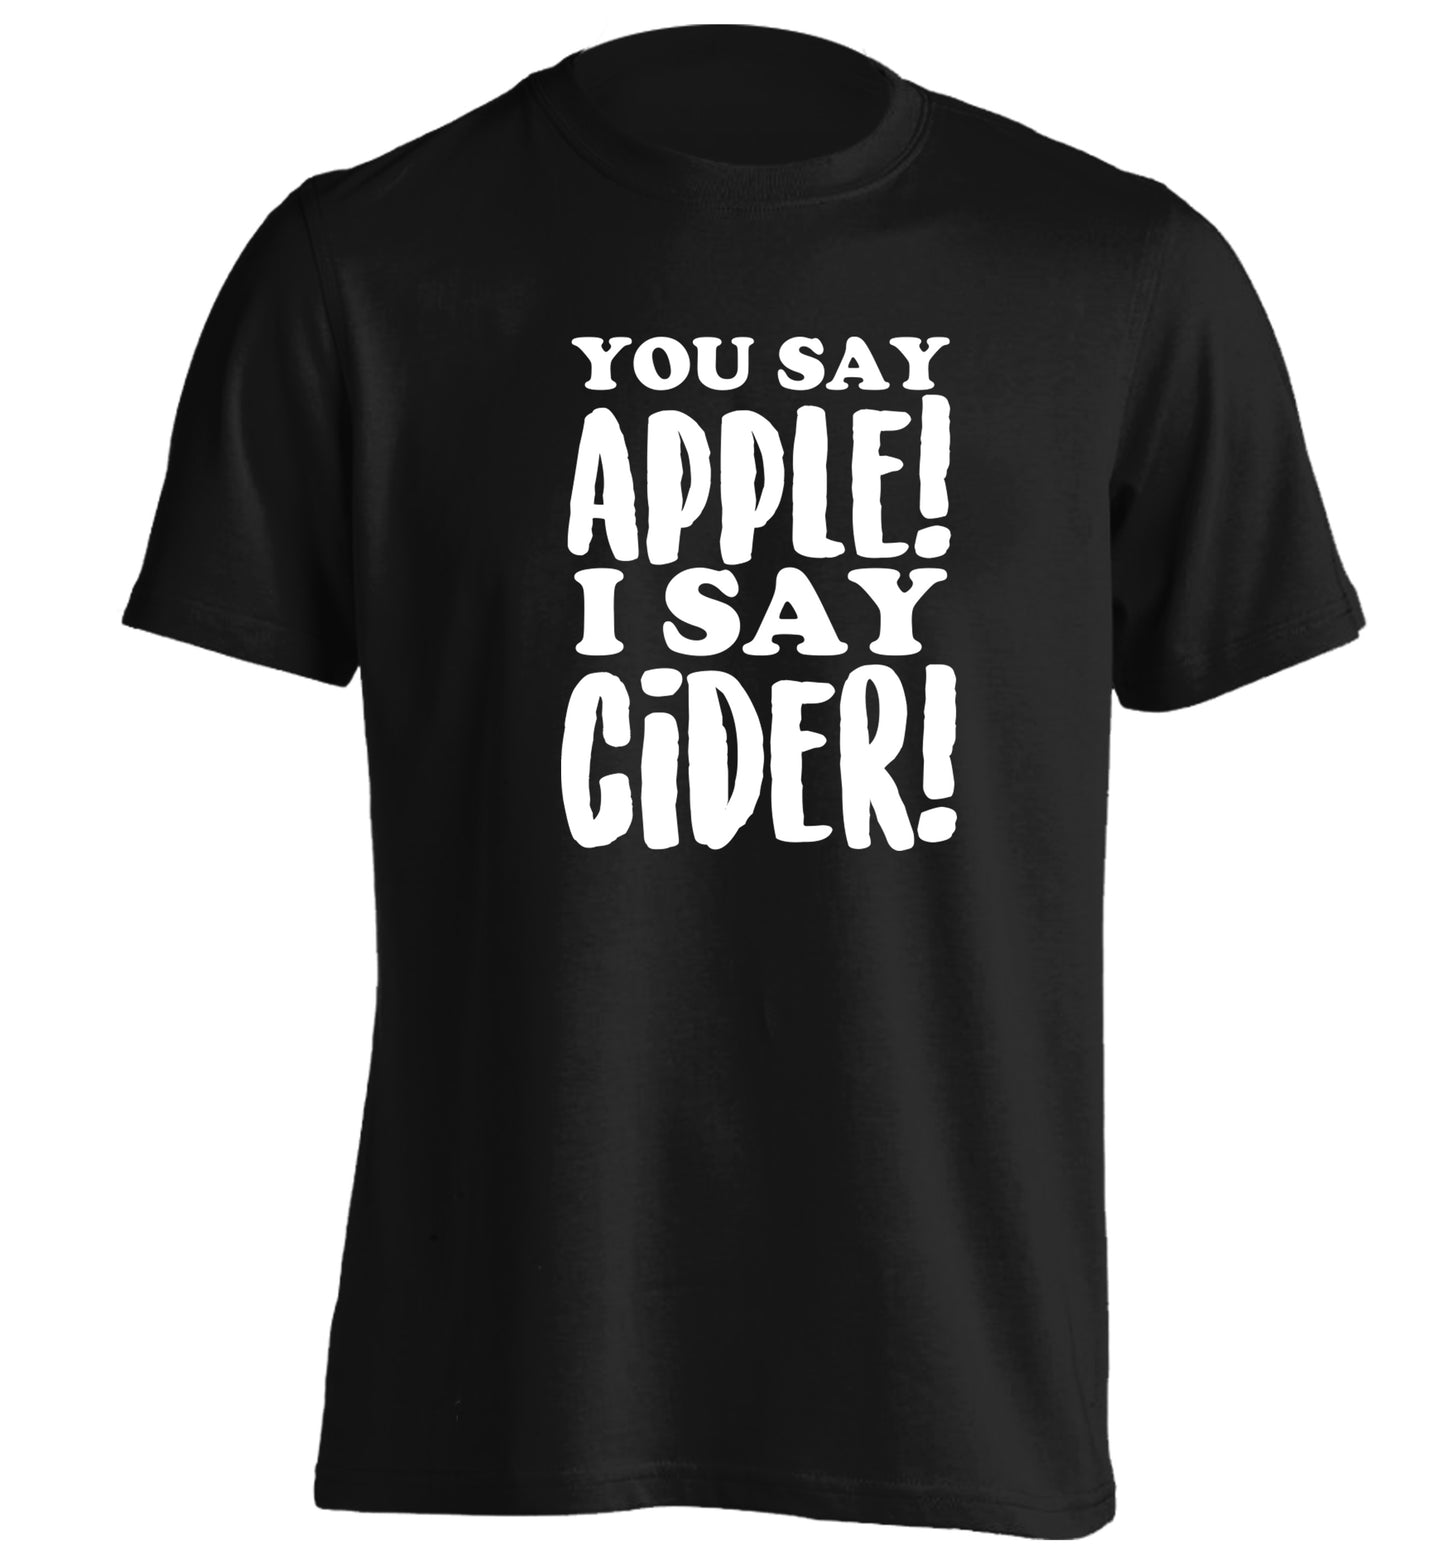 You say apple I say cider! adults unisex black Tshirt 2XL